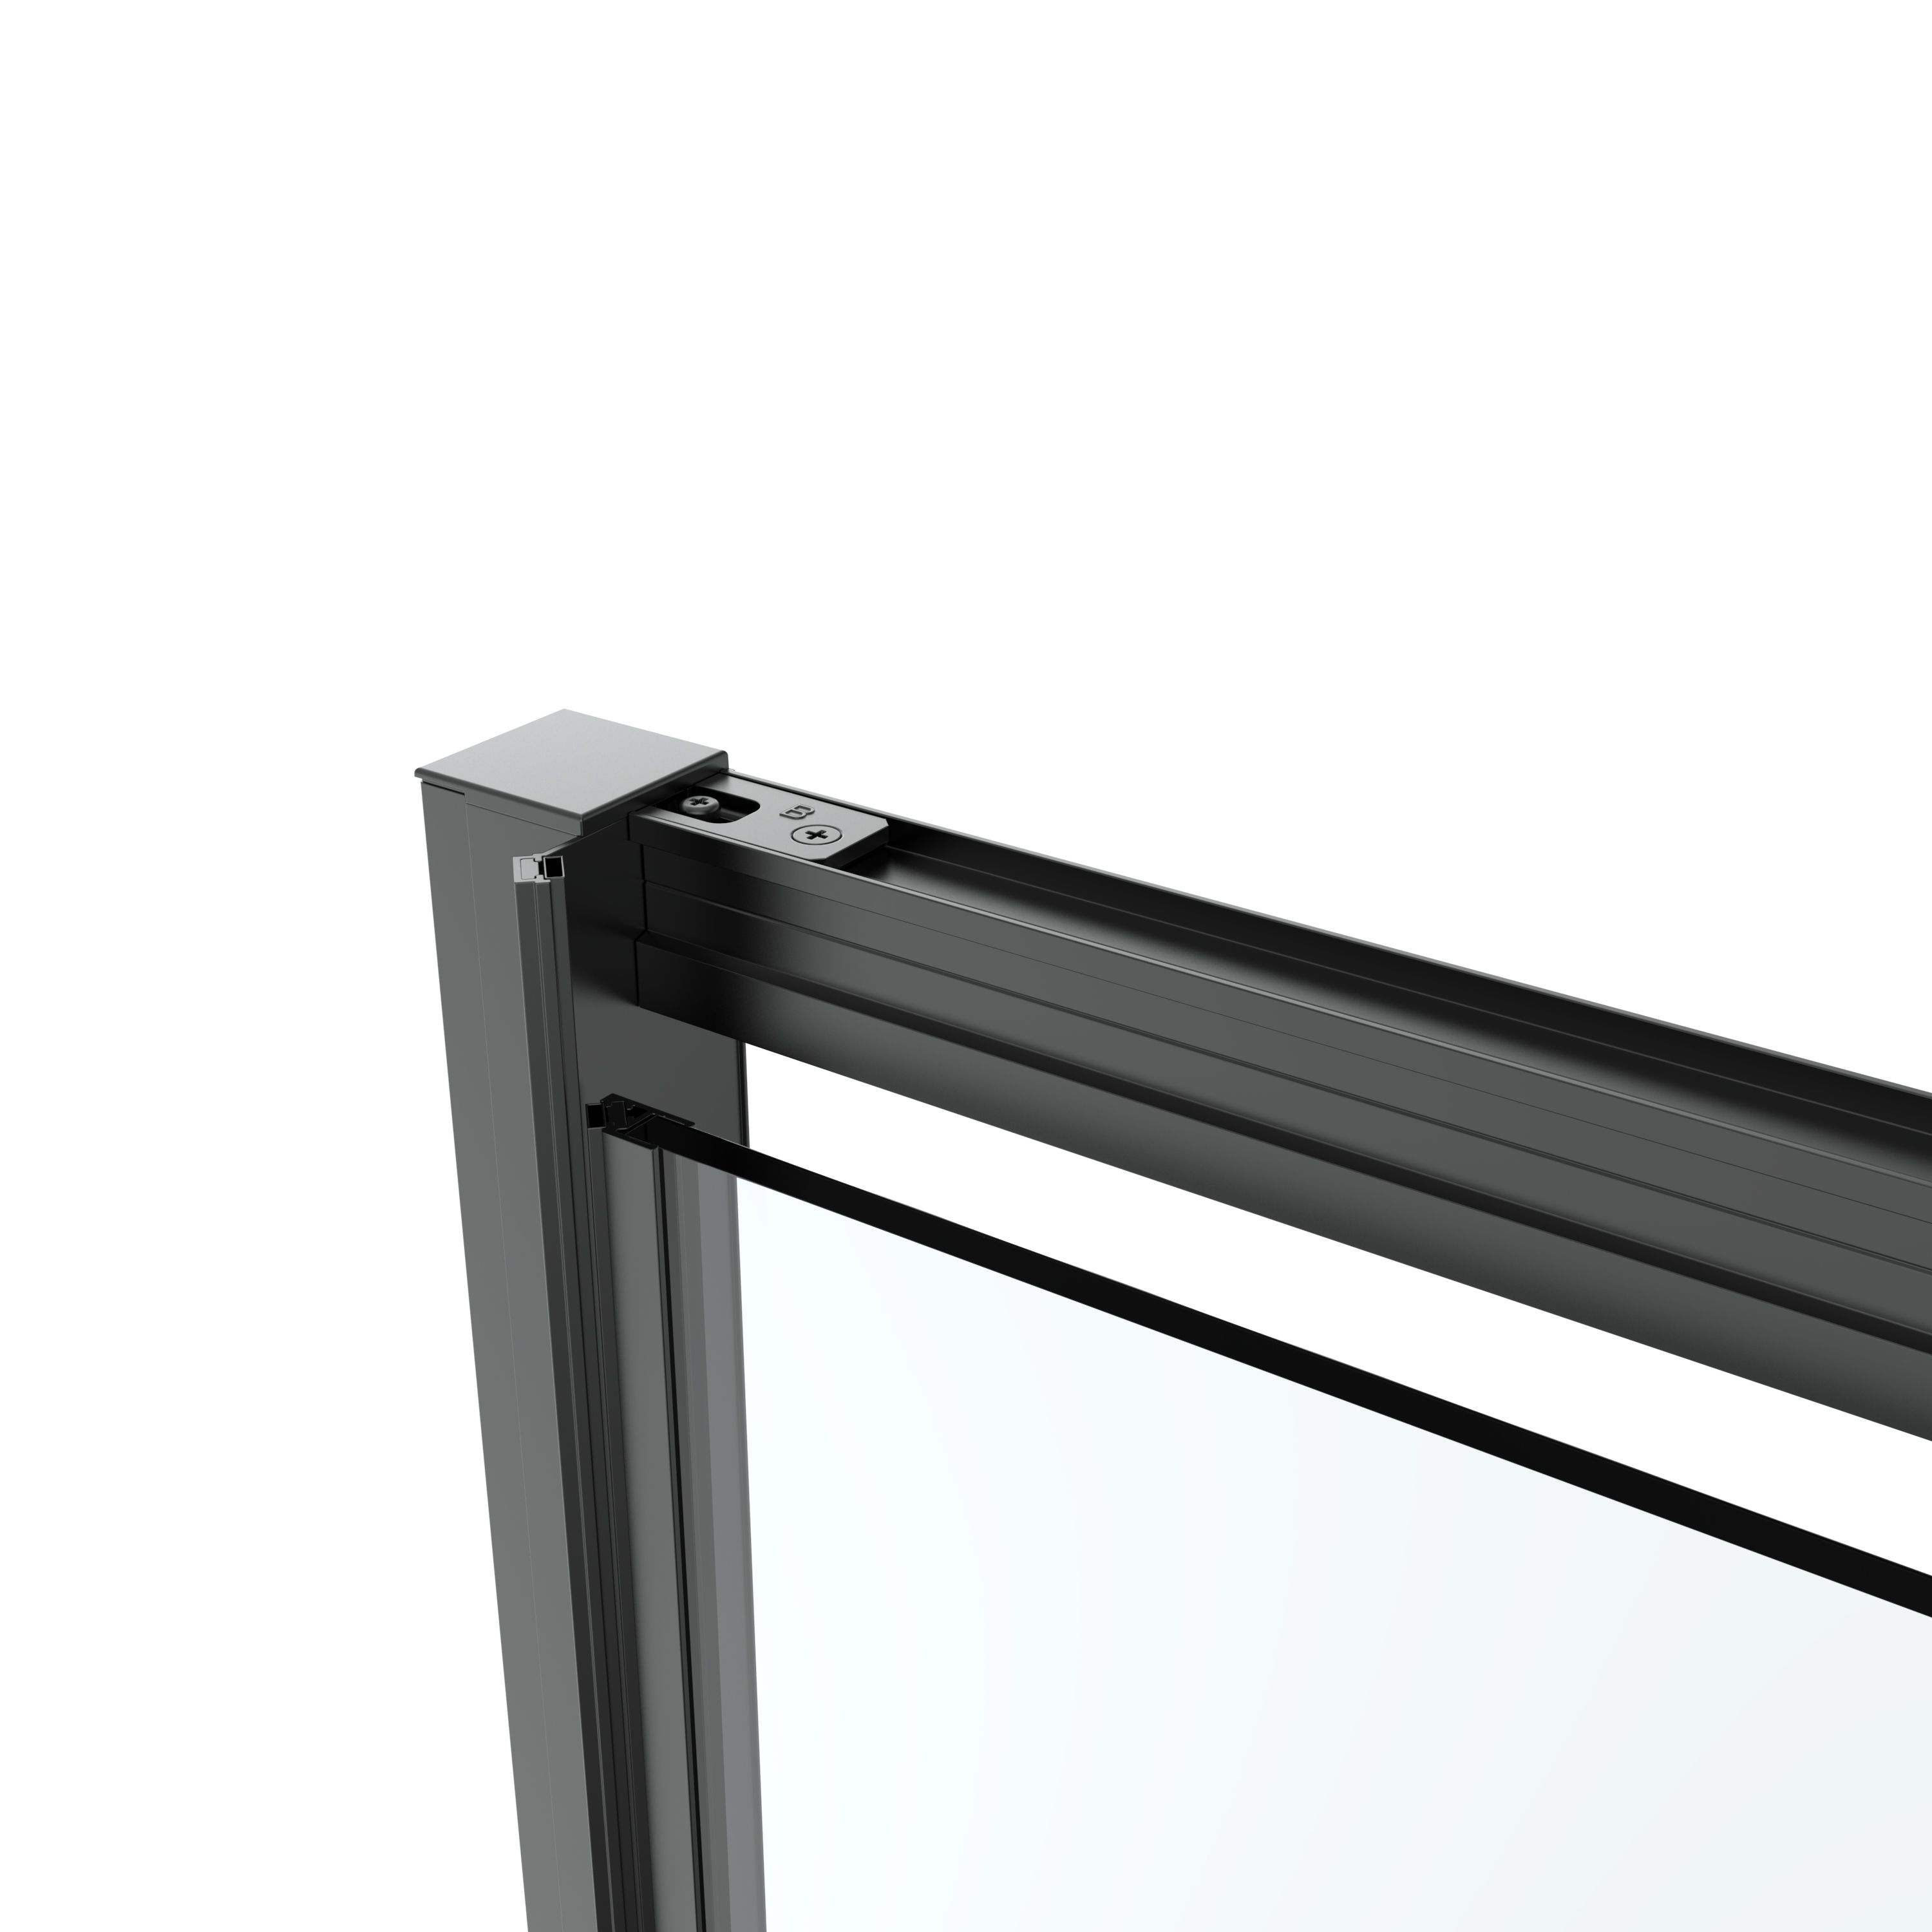 GoodHome Ledava Minimal frame Black Chrome effect Clear glass Half open pivot Shower Door (H)195cm (W)100cm